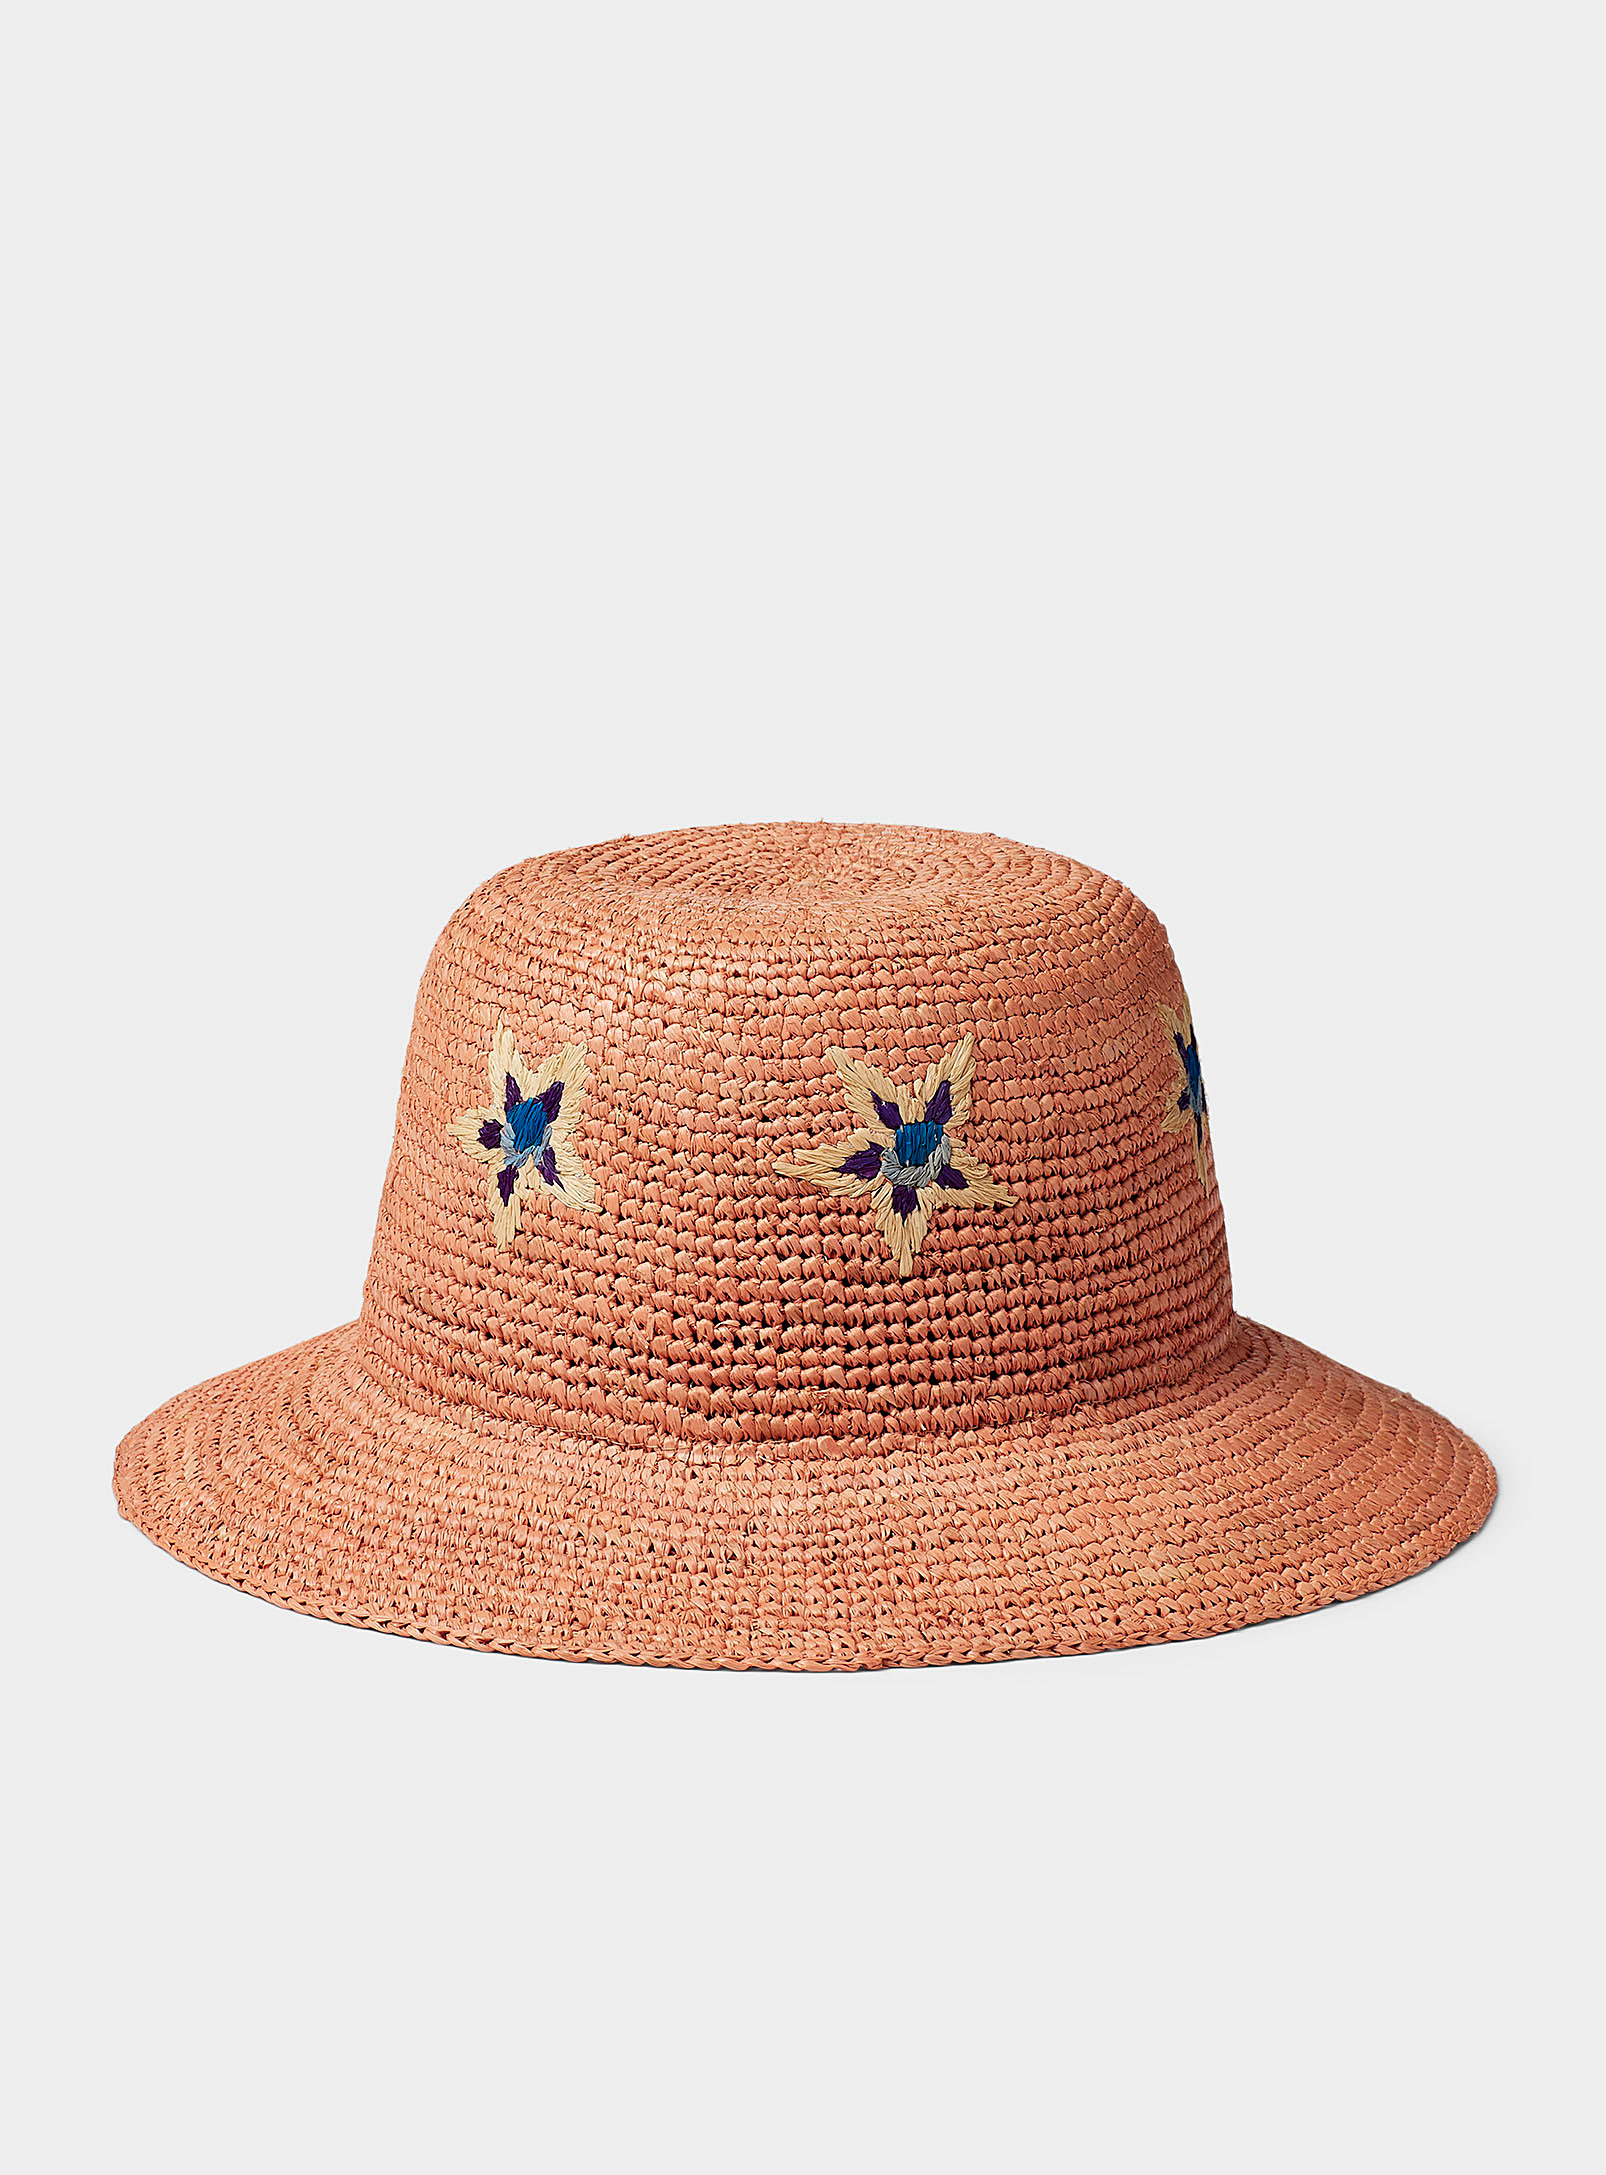 Paul Smith - Women's Ibiza coloured straw hat